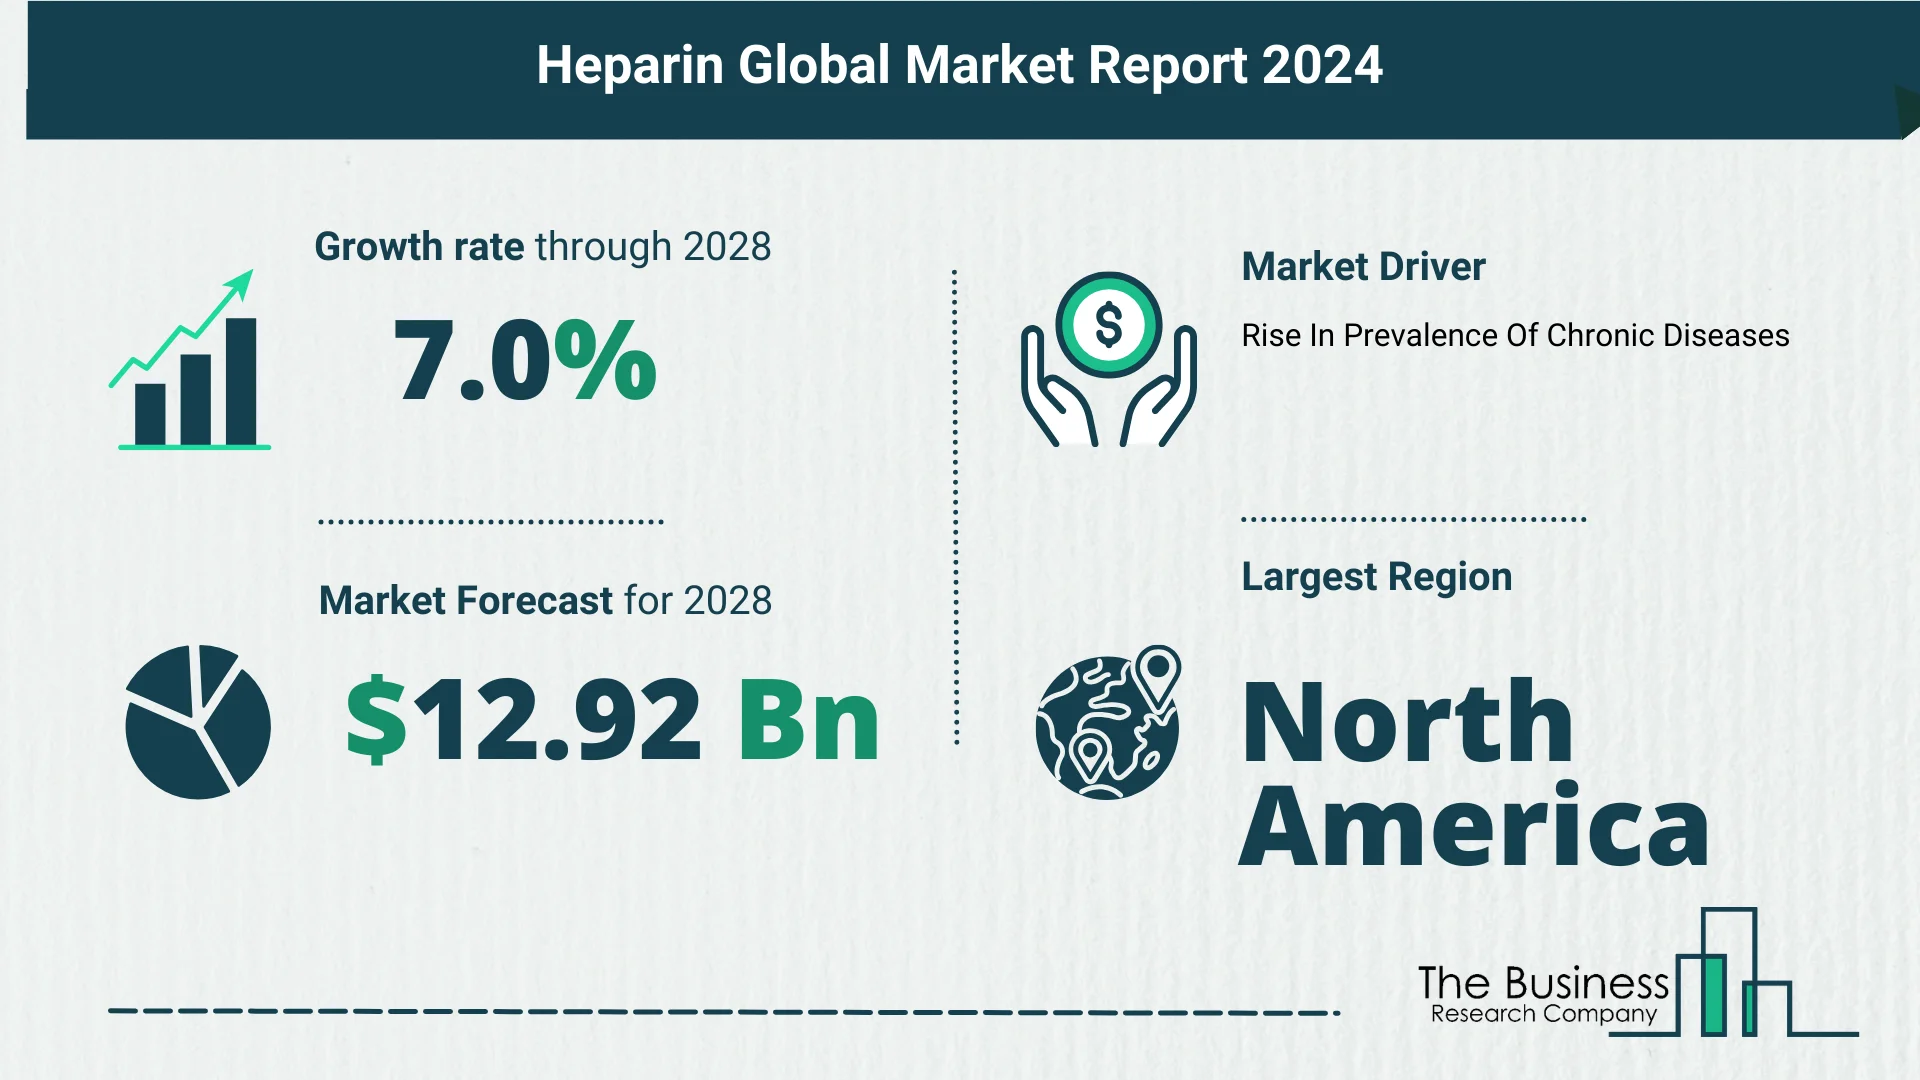 Heparin Market Forecast 2024: Forecast Market Size, Drivers And Key Segments